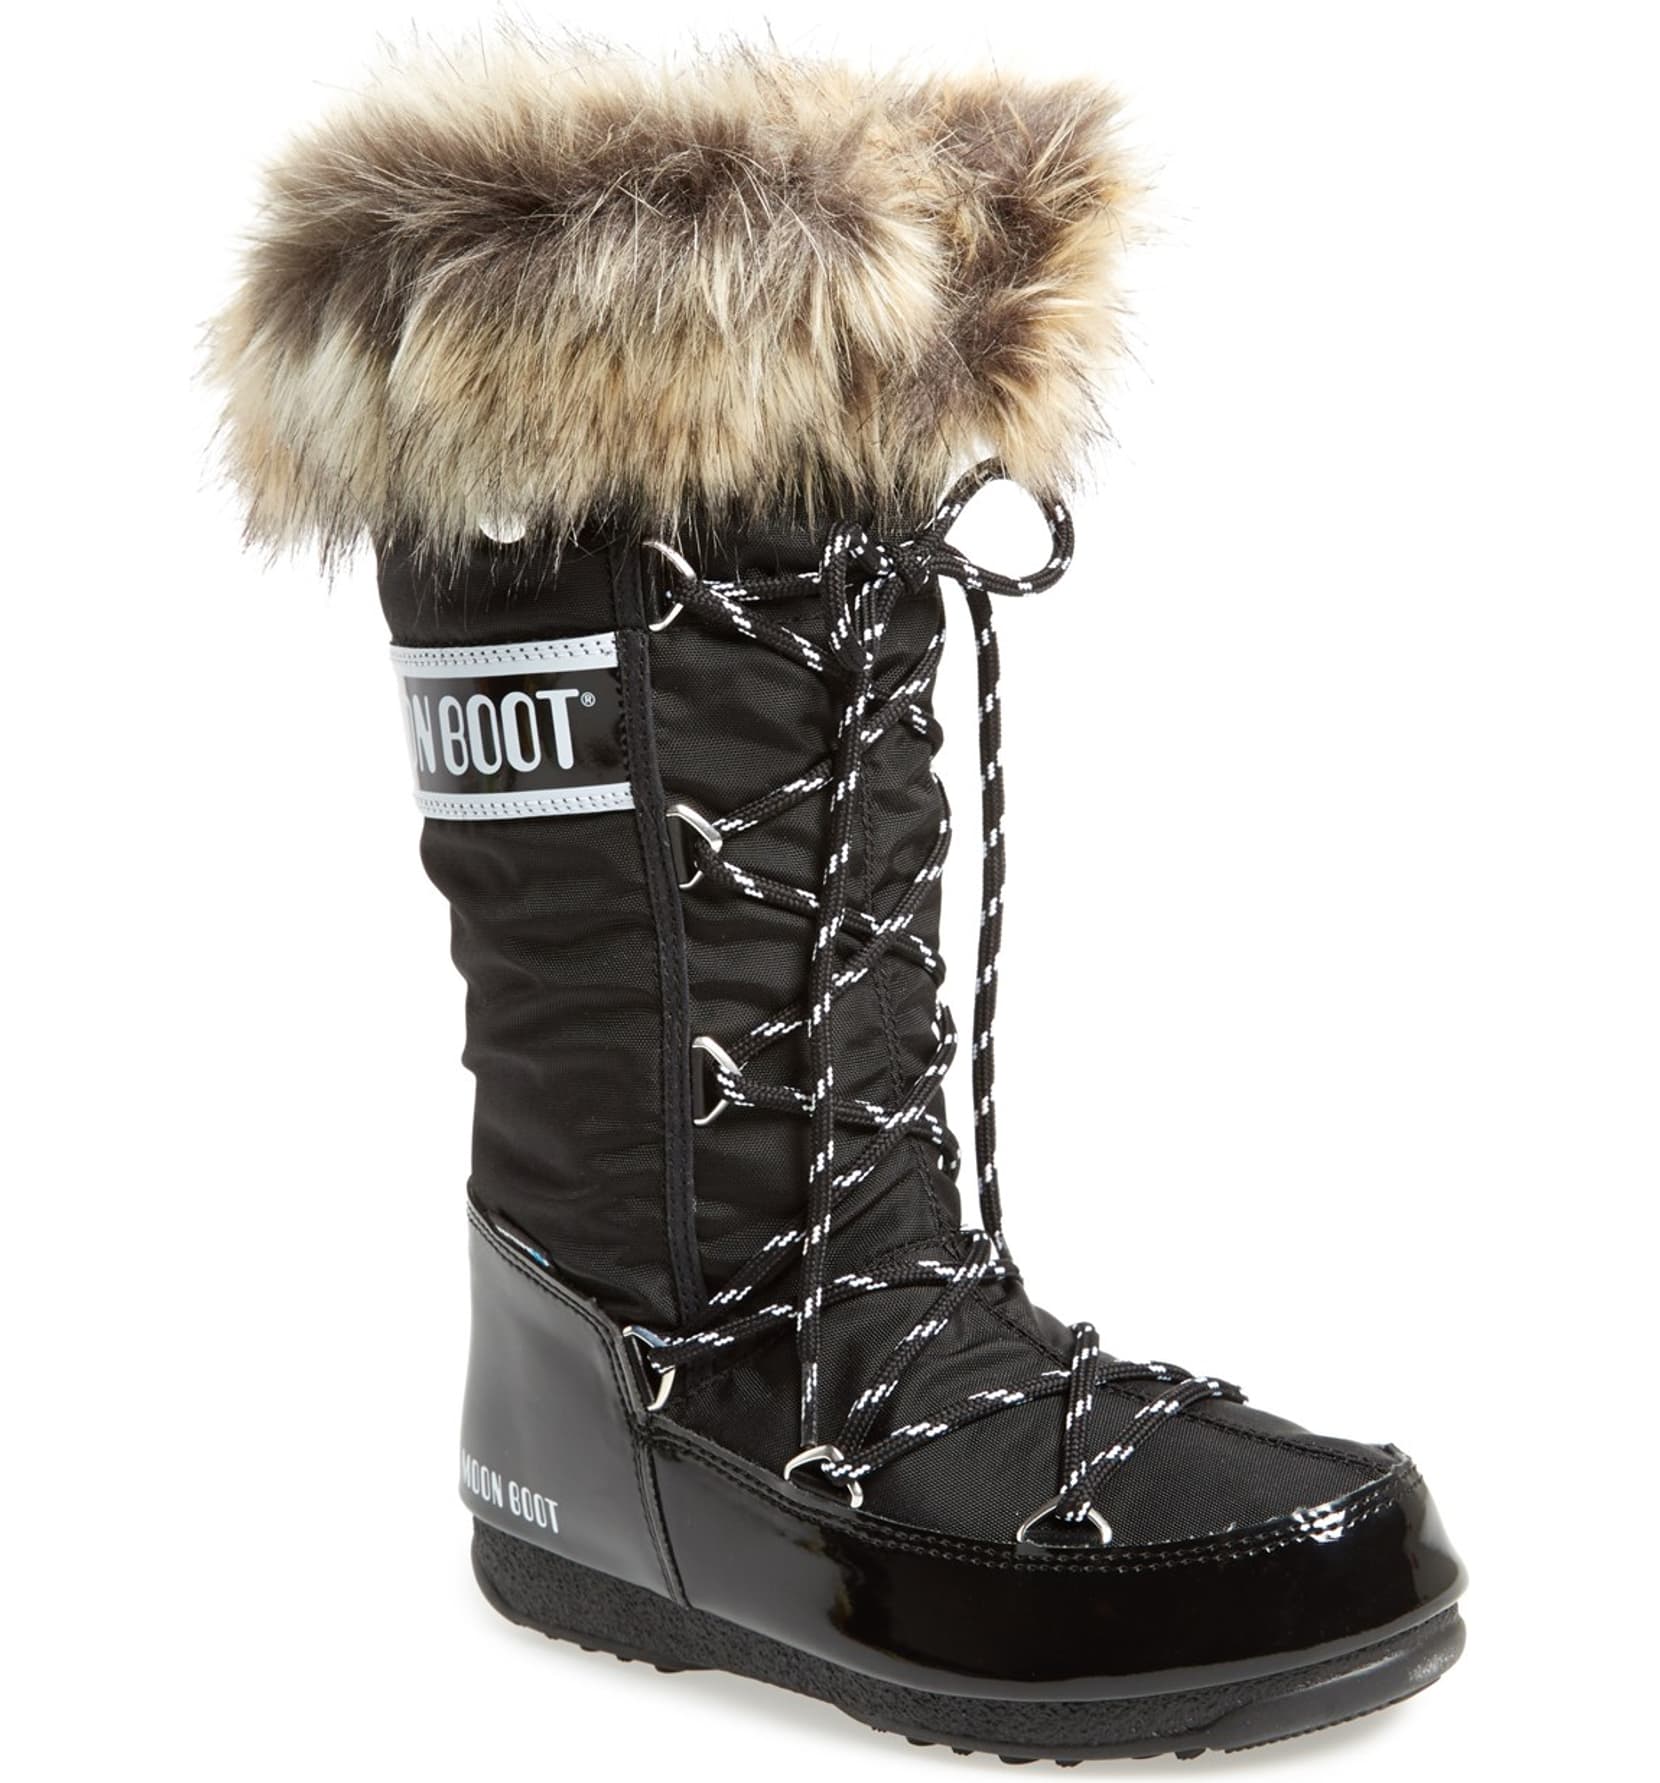 Tecnica Moon Boot Monaco Women's Black Winter Boots | eBay